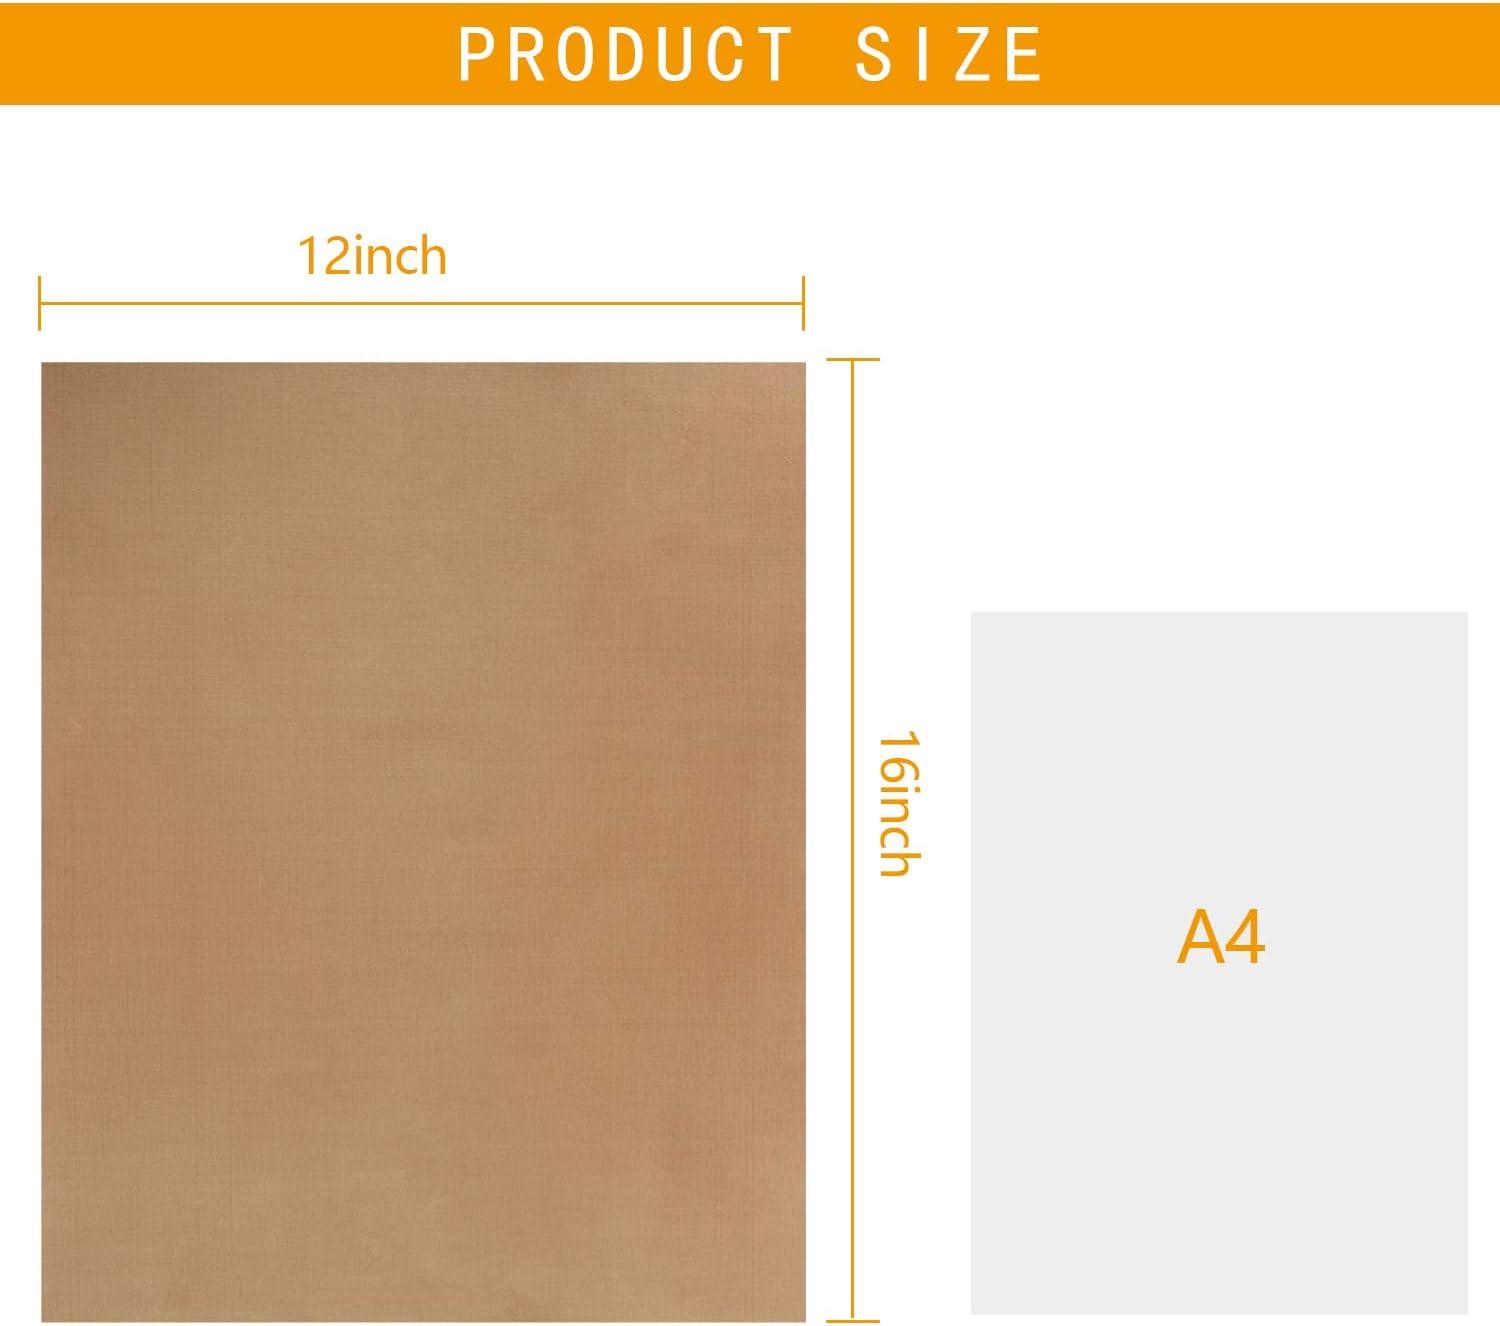 PTFE Sheet for Heat Press Transfer Sheet Non Stick Heat Resistant Craft Mat  - China PTFE Sheet, PTFE Board